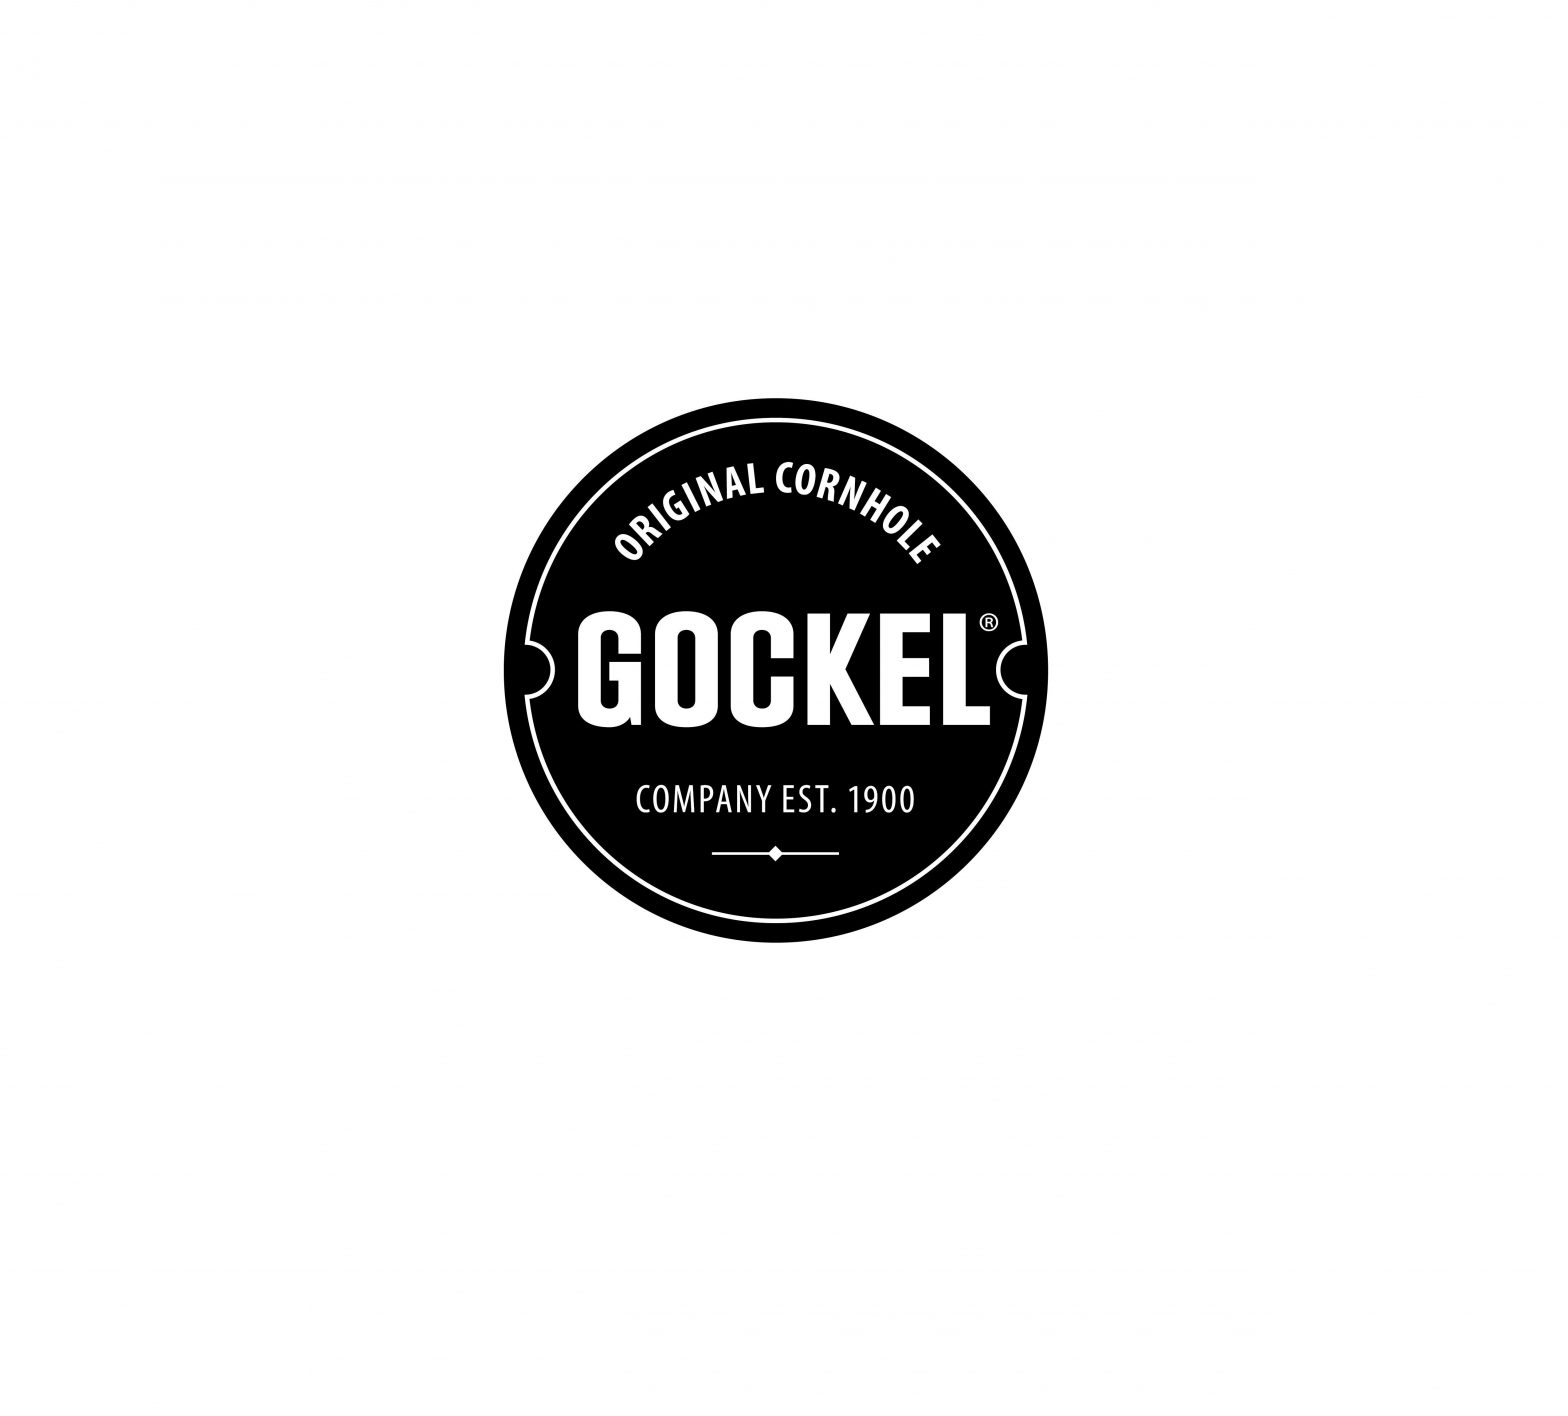 GOCKEL Original Cornhole User Manual